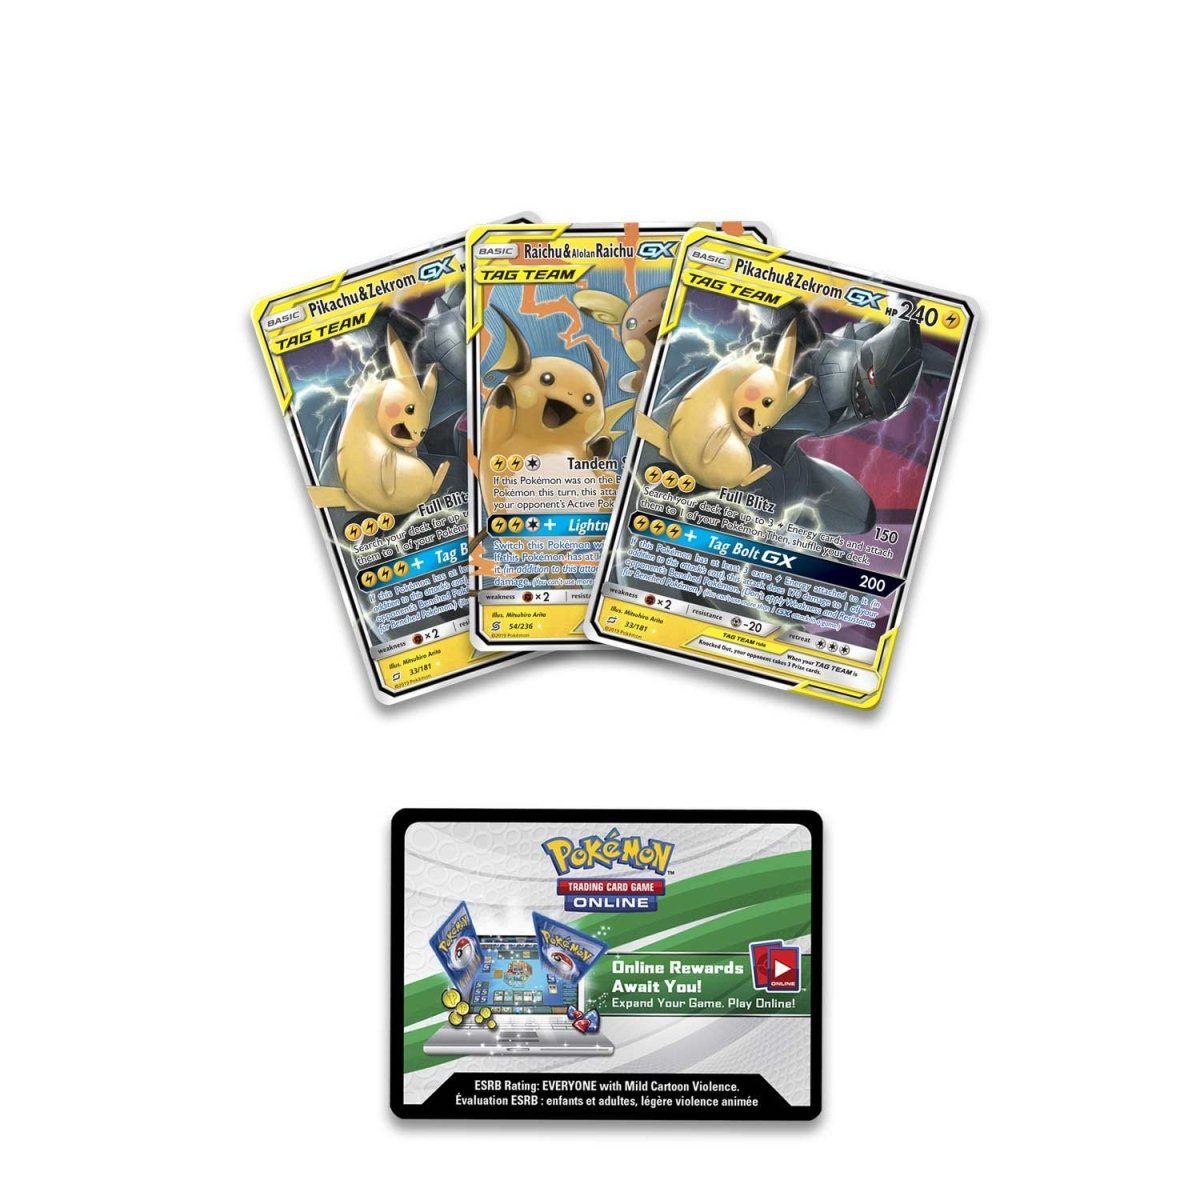 Pikachu e Zekrom-GX / Pikachu & Zekrom-GX (33/181), Busca de Cards